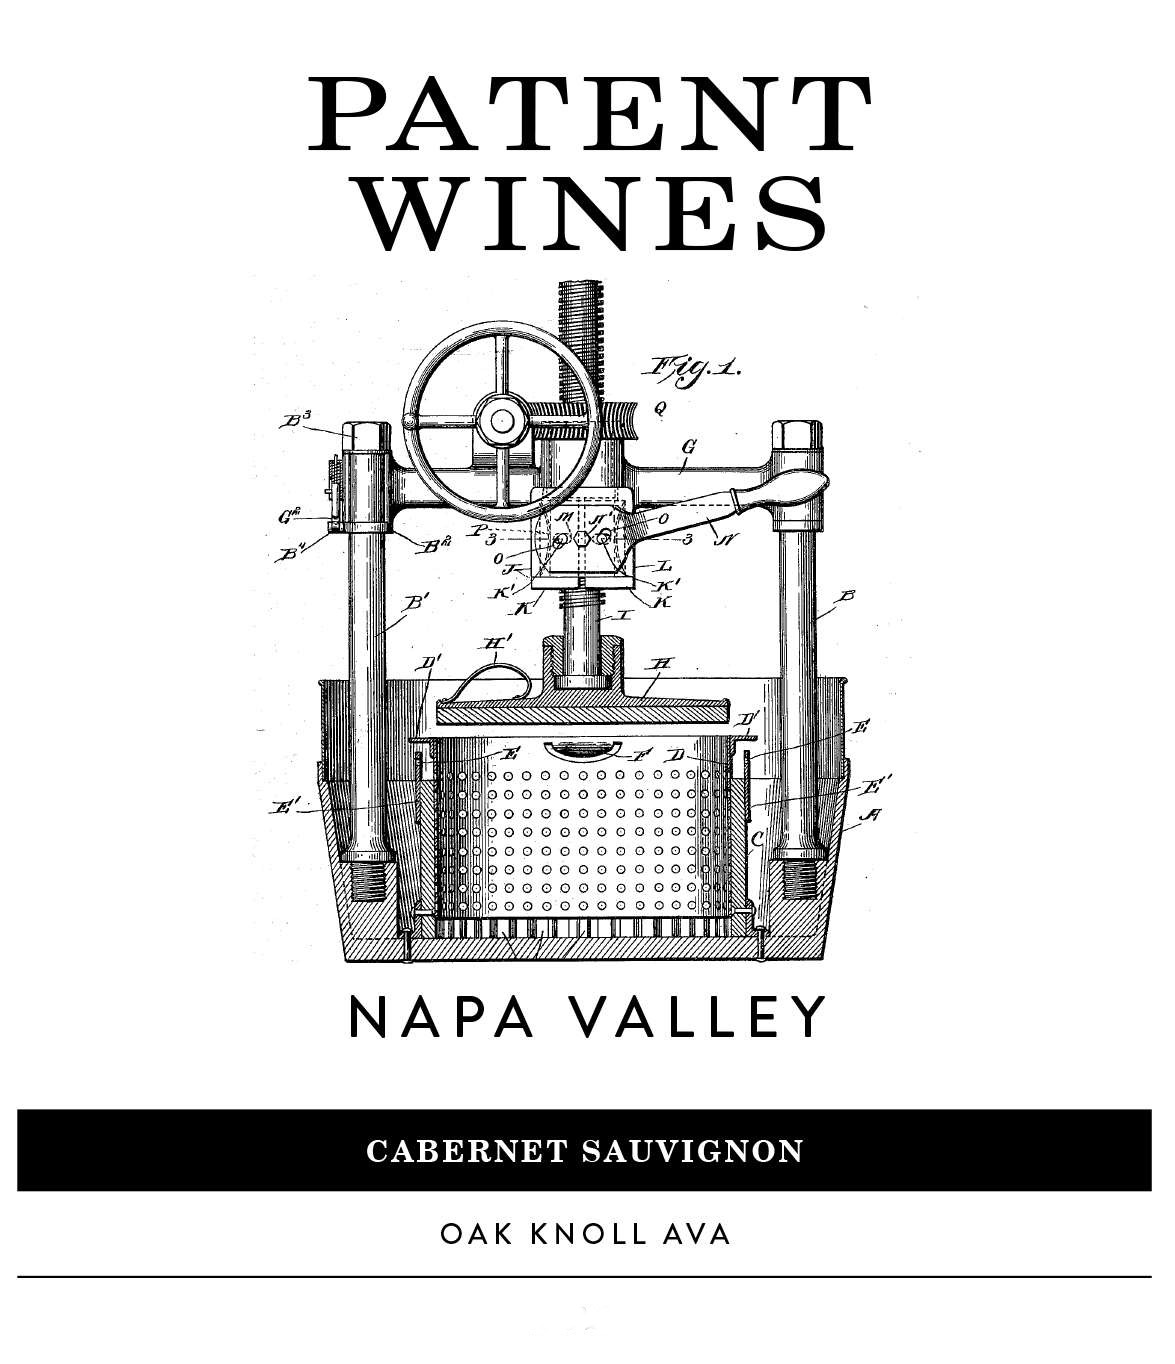 Patent Wines - Cabernet Sauvignon label